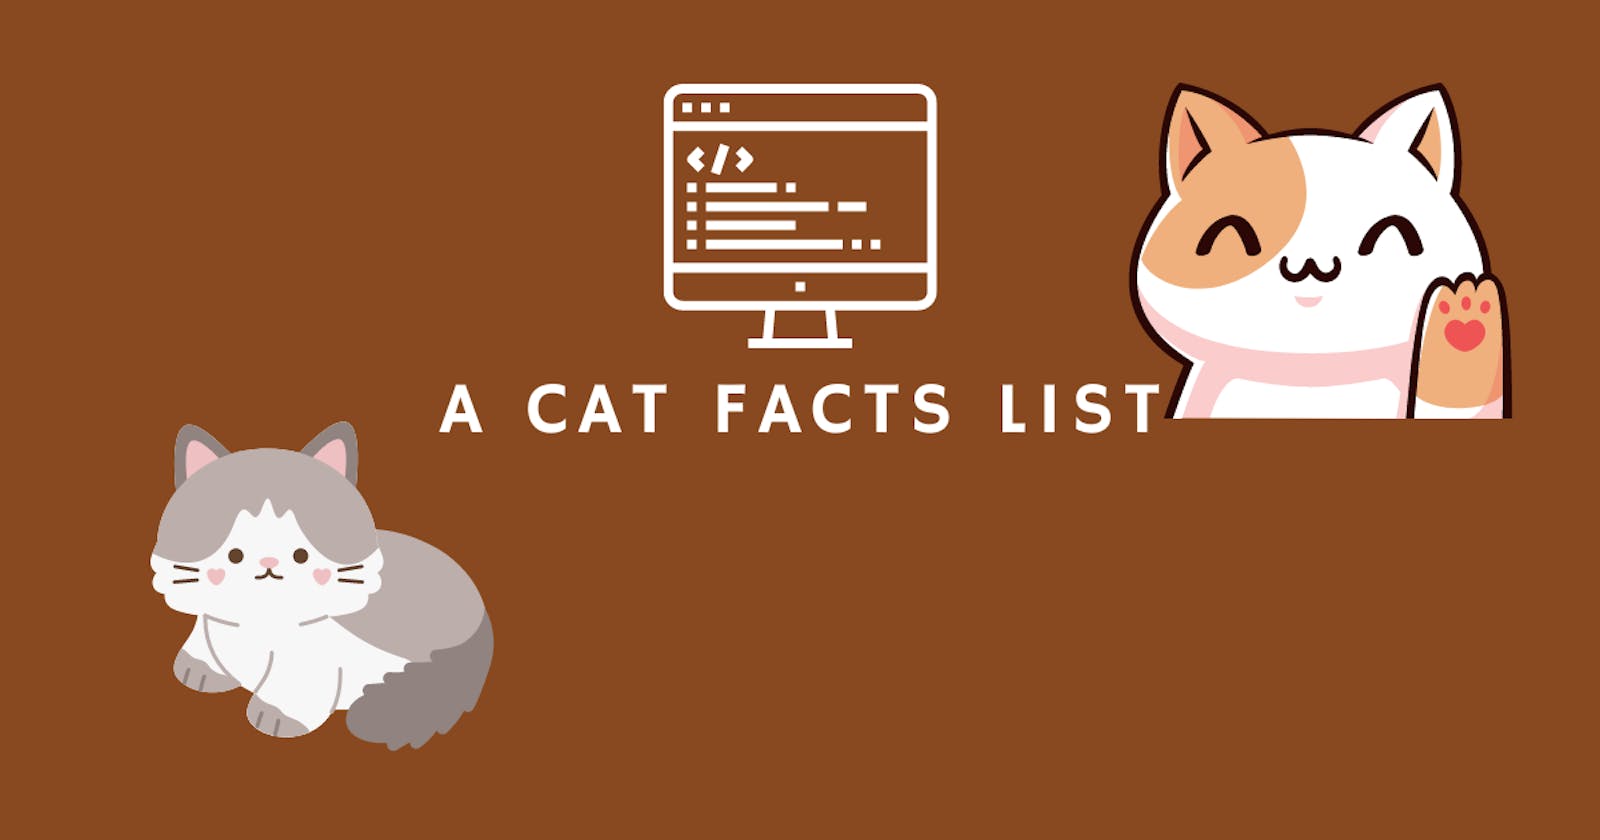 A cat facts list